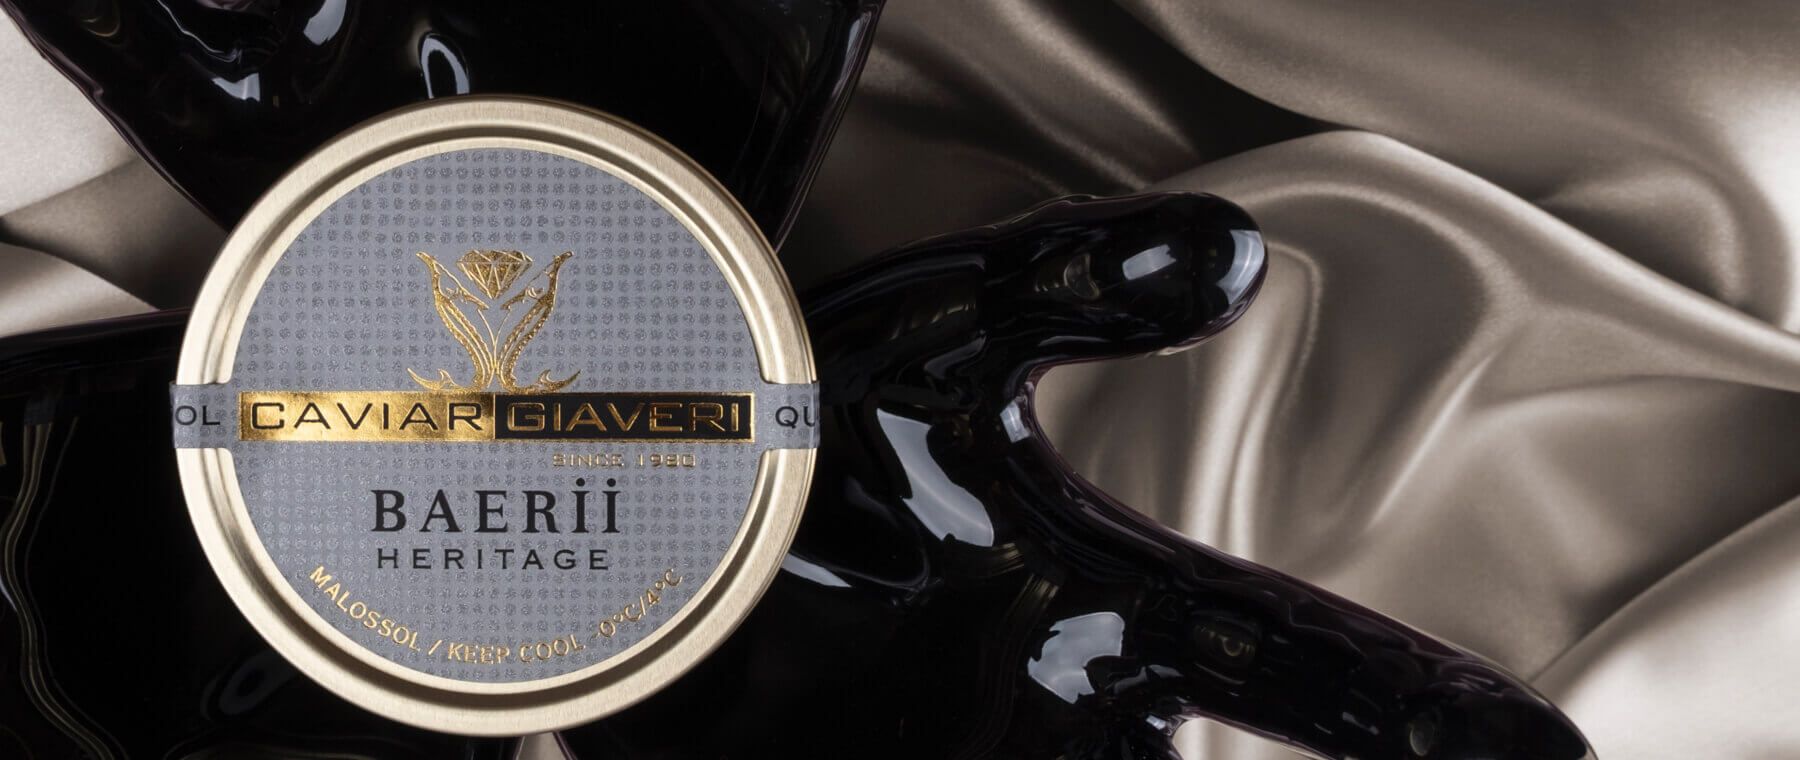 Baerii Heritage Caviar Giaveri